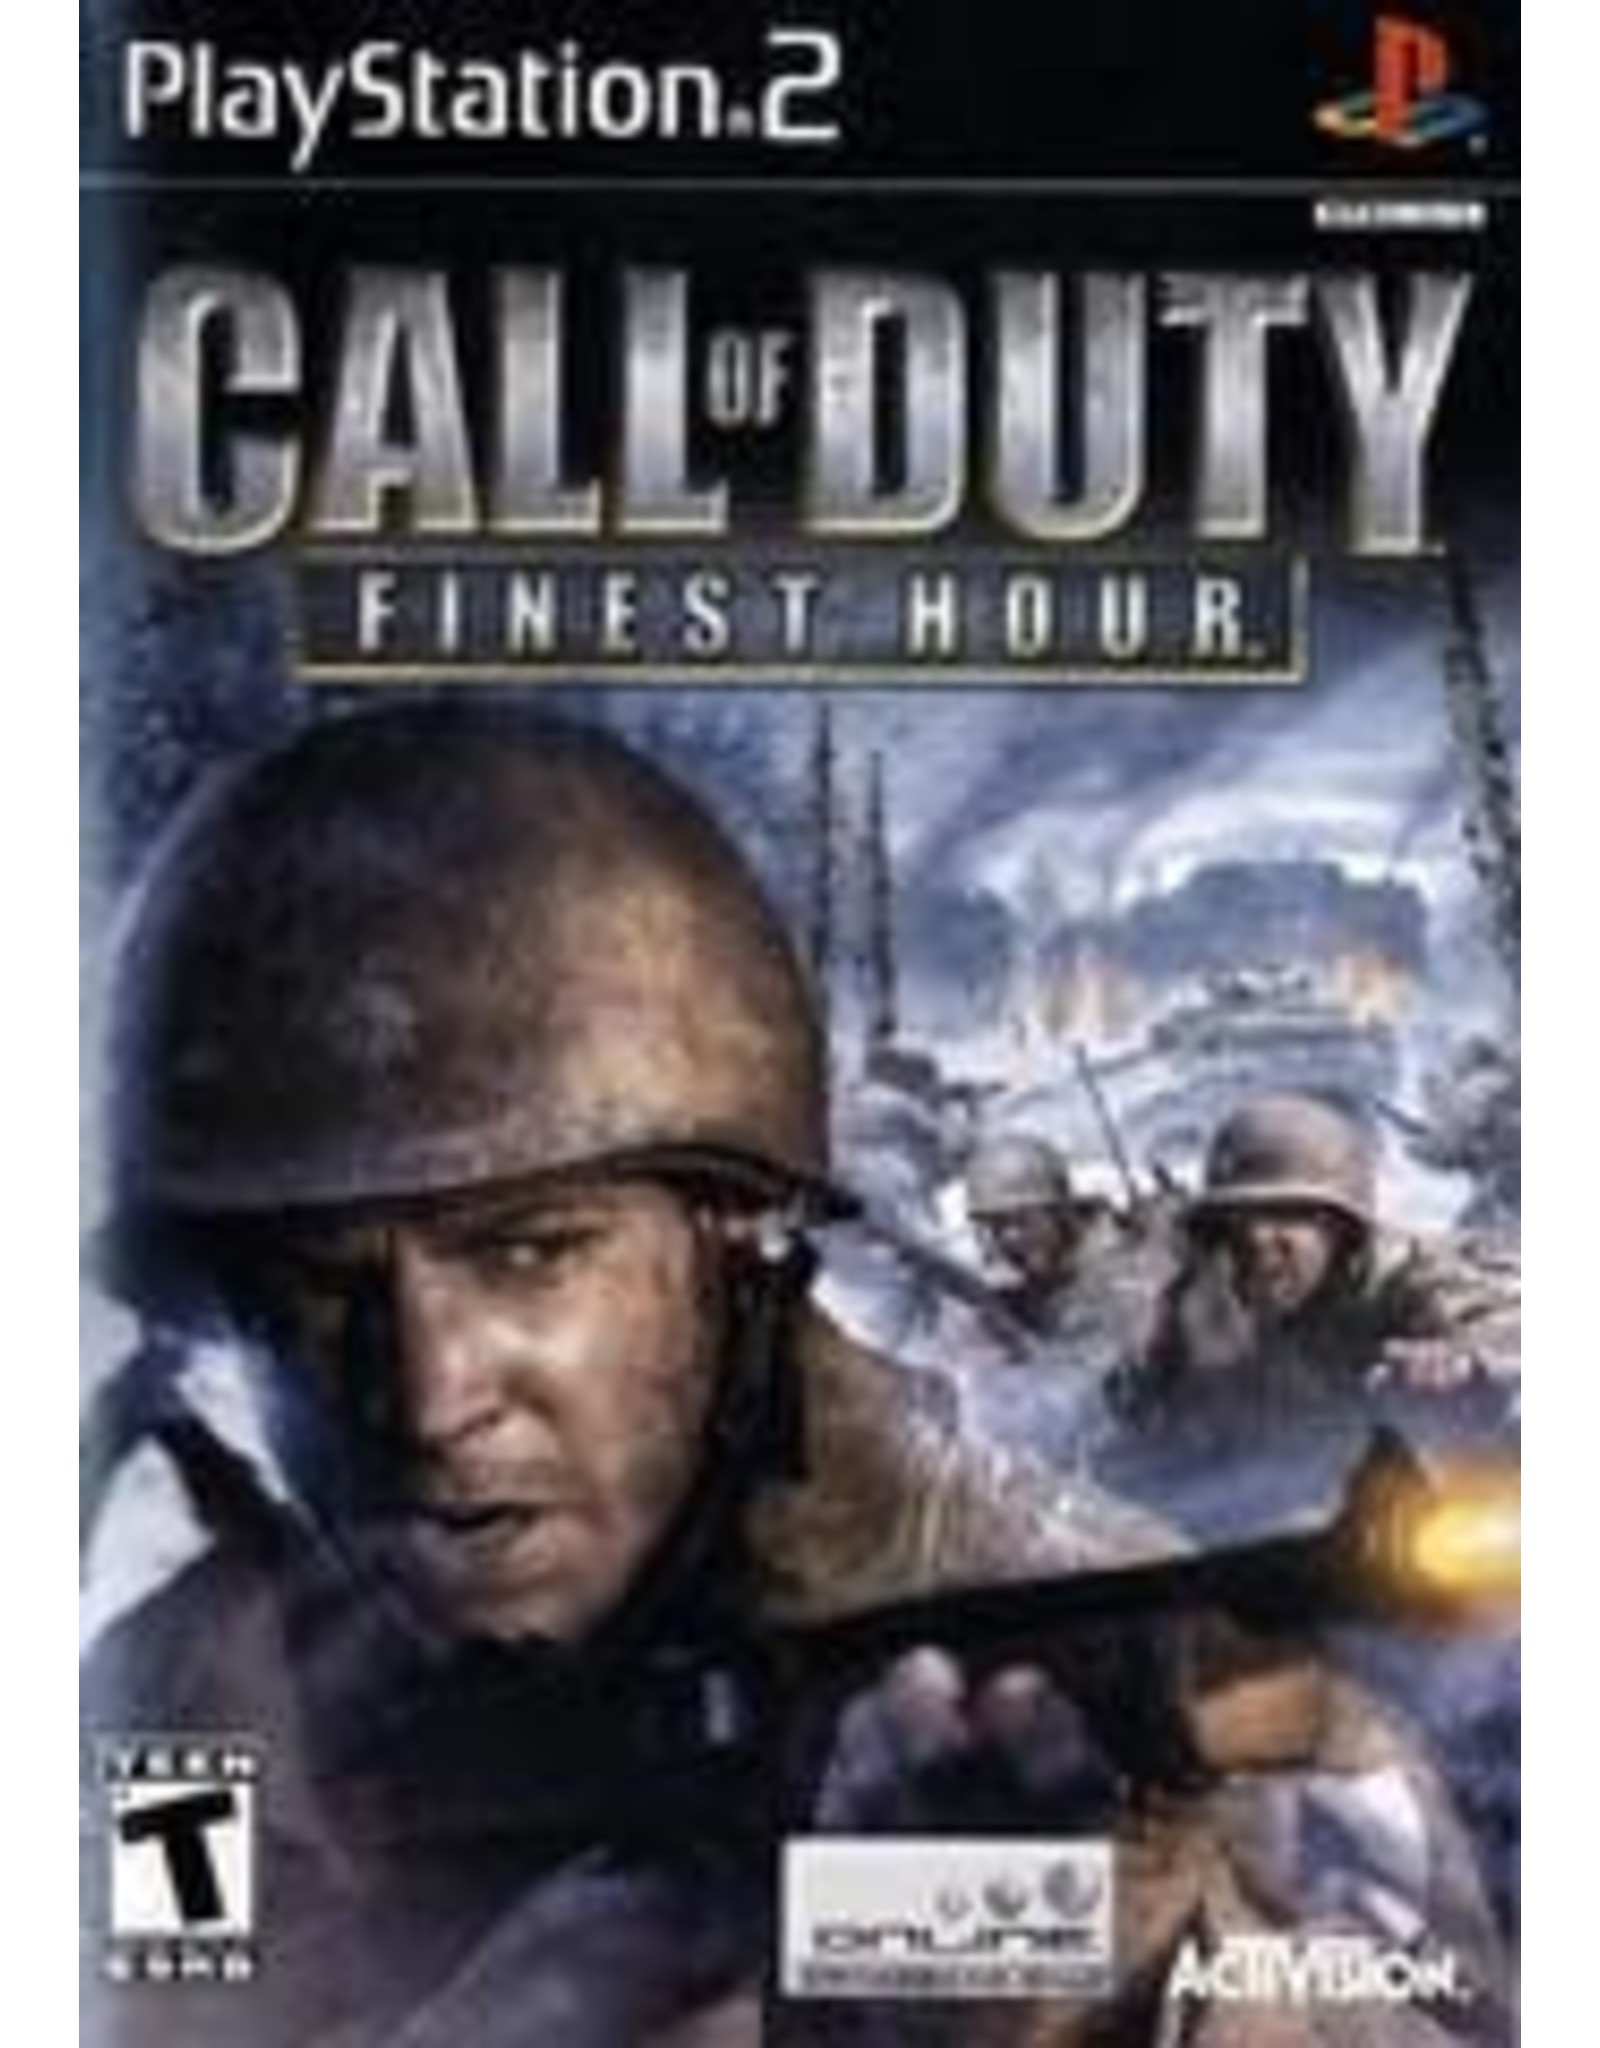 Playstation 2 Call of Duty Finest Hour (CiB)